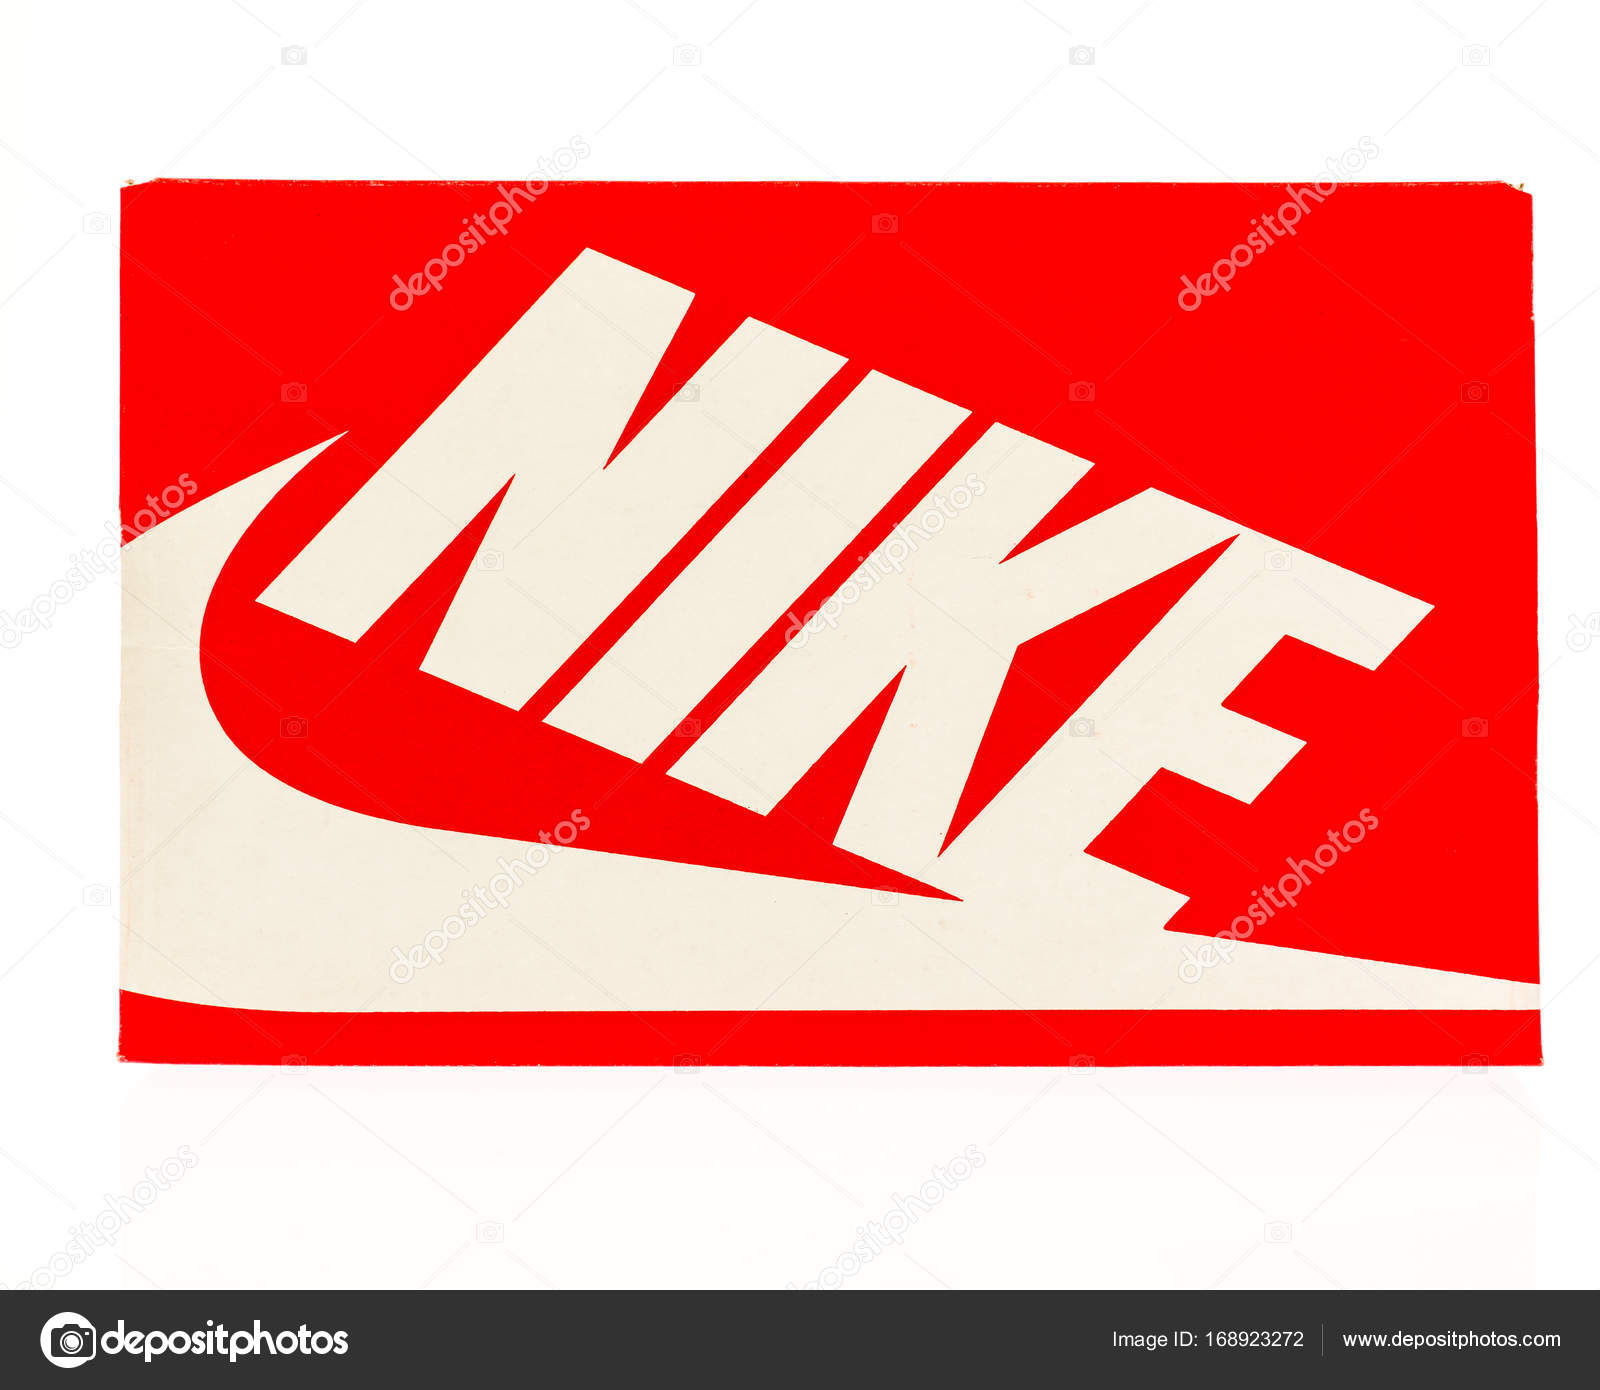 Nike Stock Photos, Royalty Free Nike Images | Depositphotos